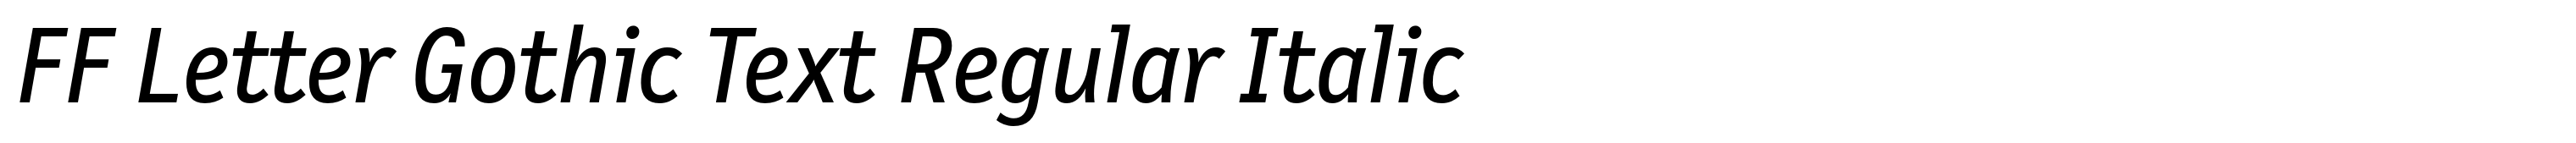 FF Letter Gothic Text Regular Italic